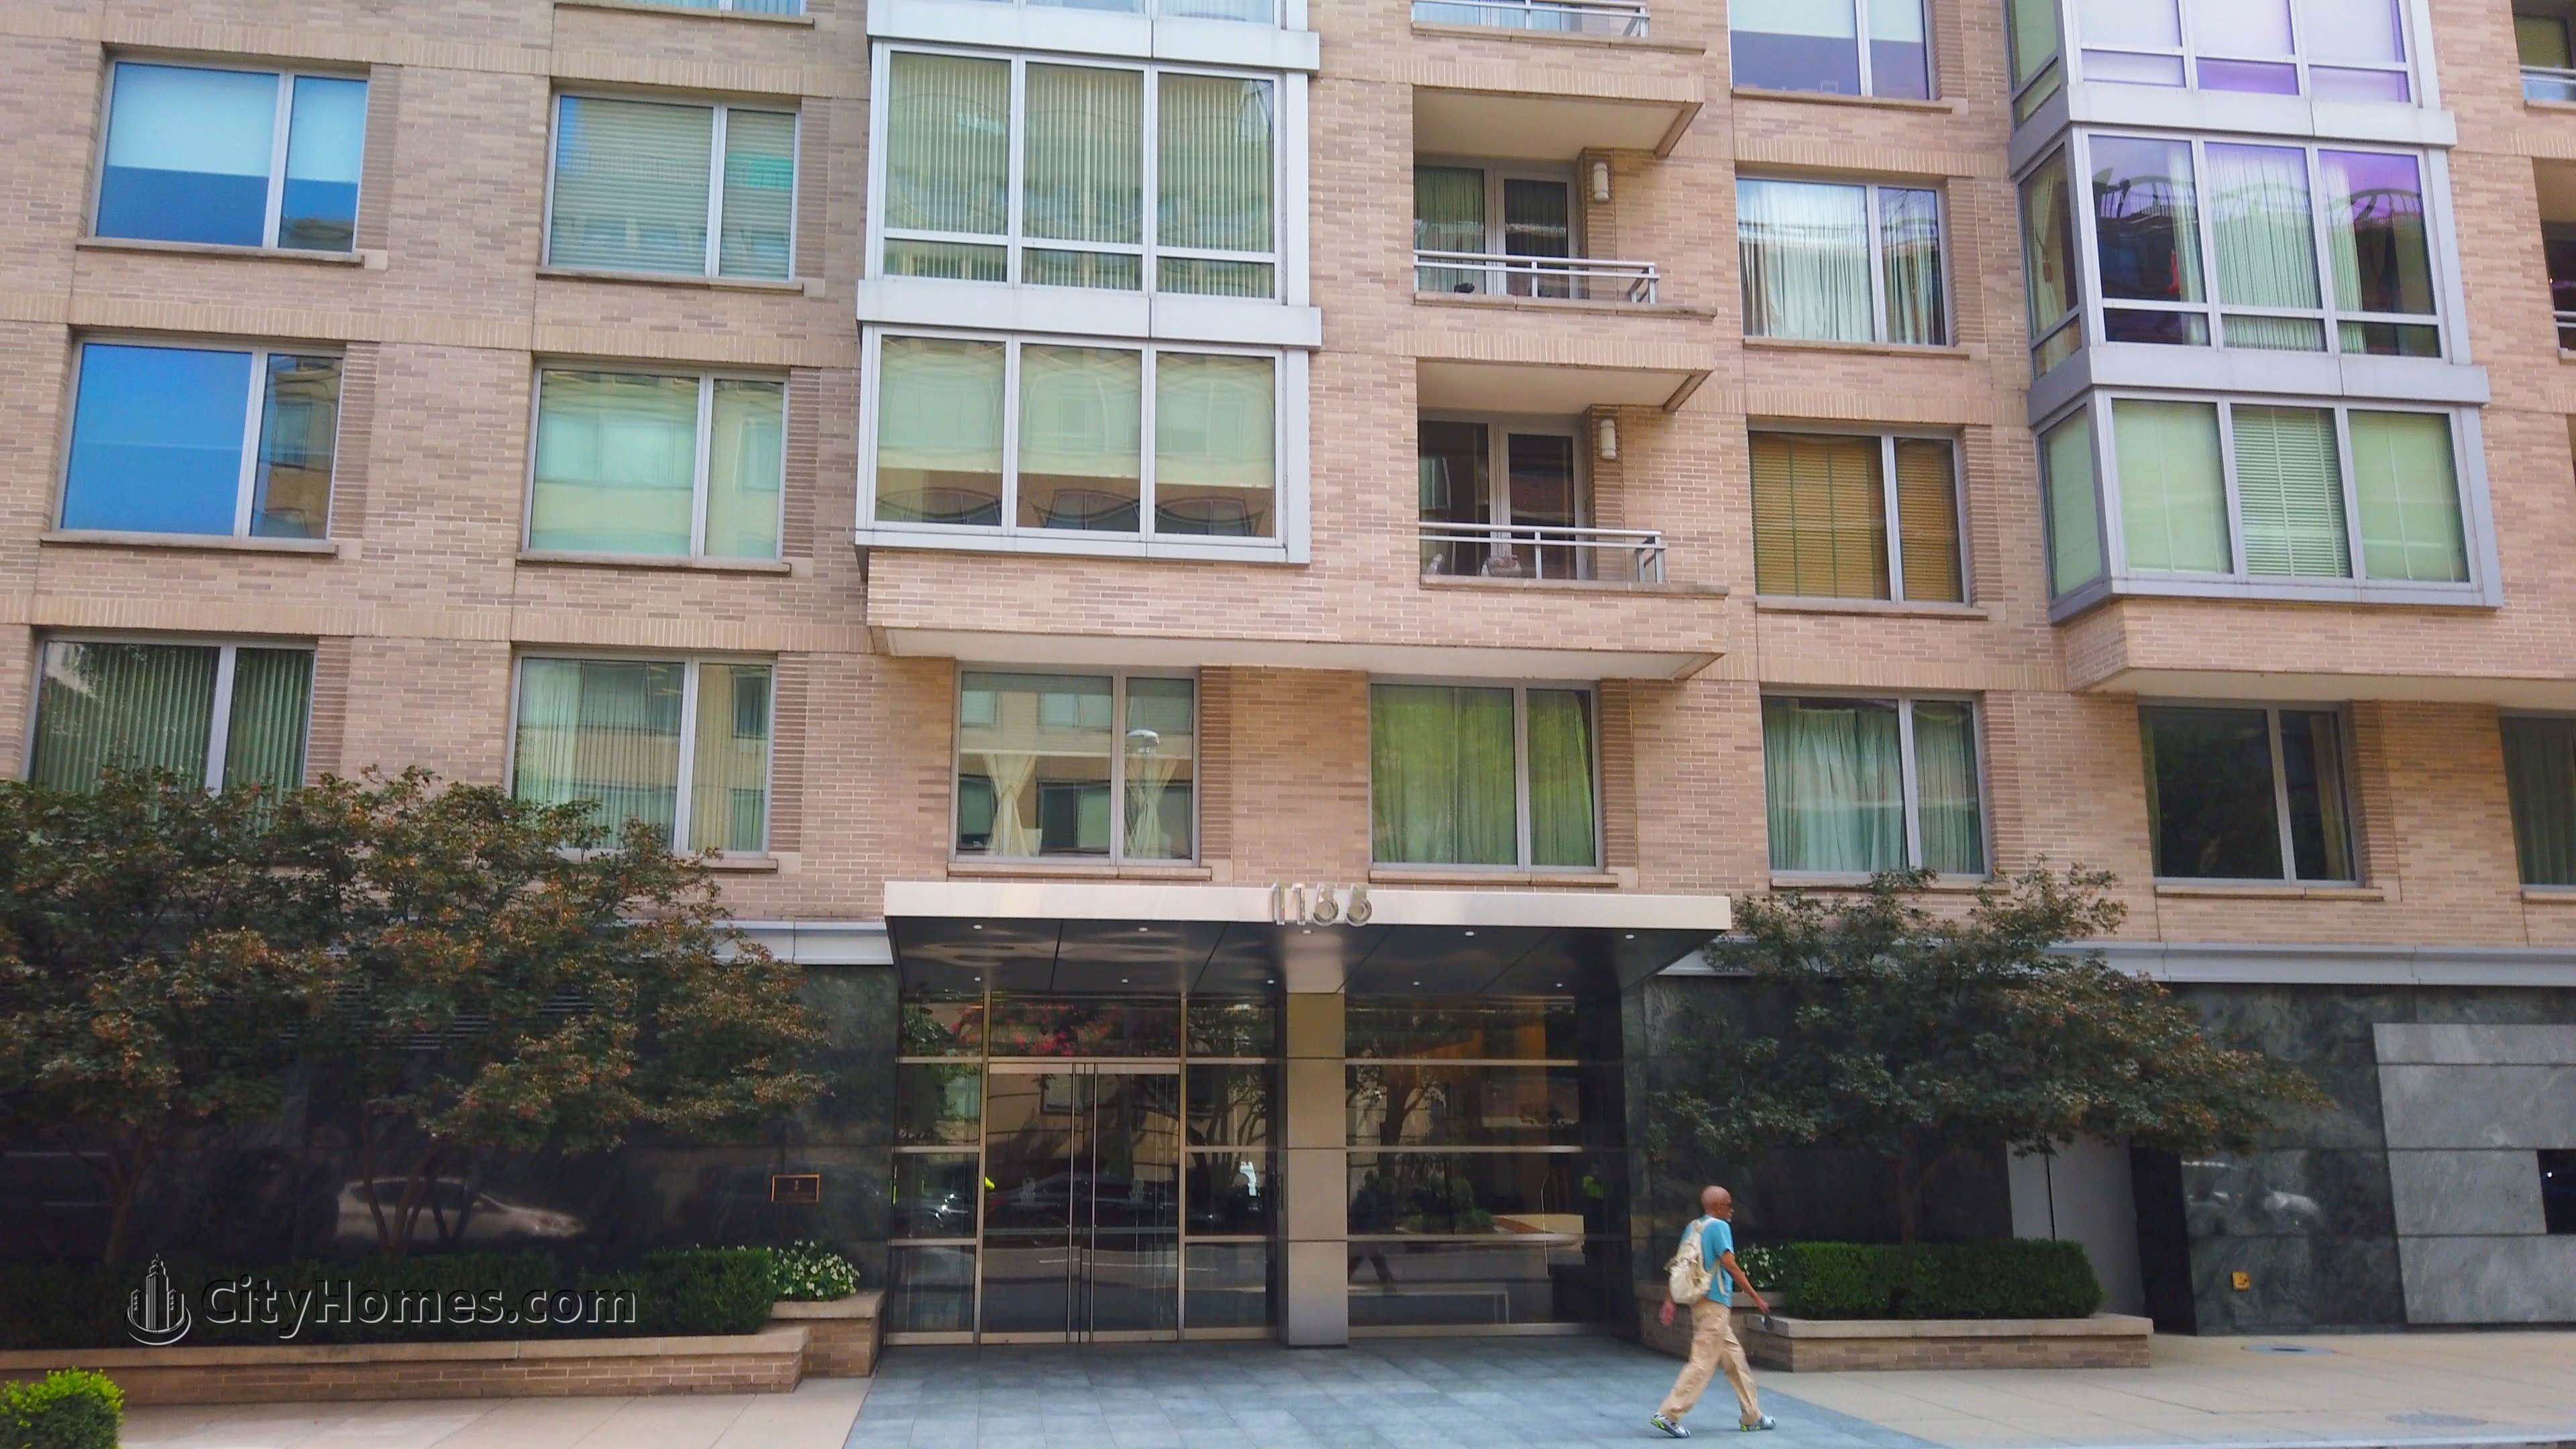 3. The Ritz-Carlton Washington gebouw op 1111 & 1155 23rd Street NW, West End, Washington, DC 20037